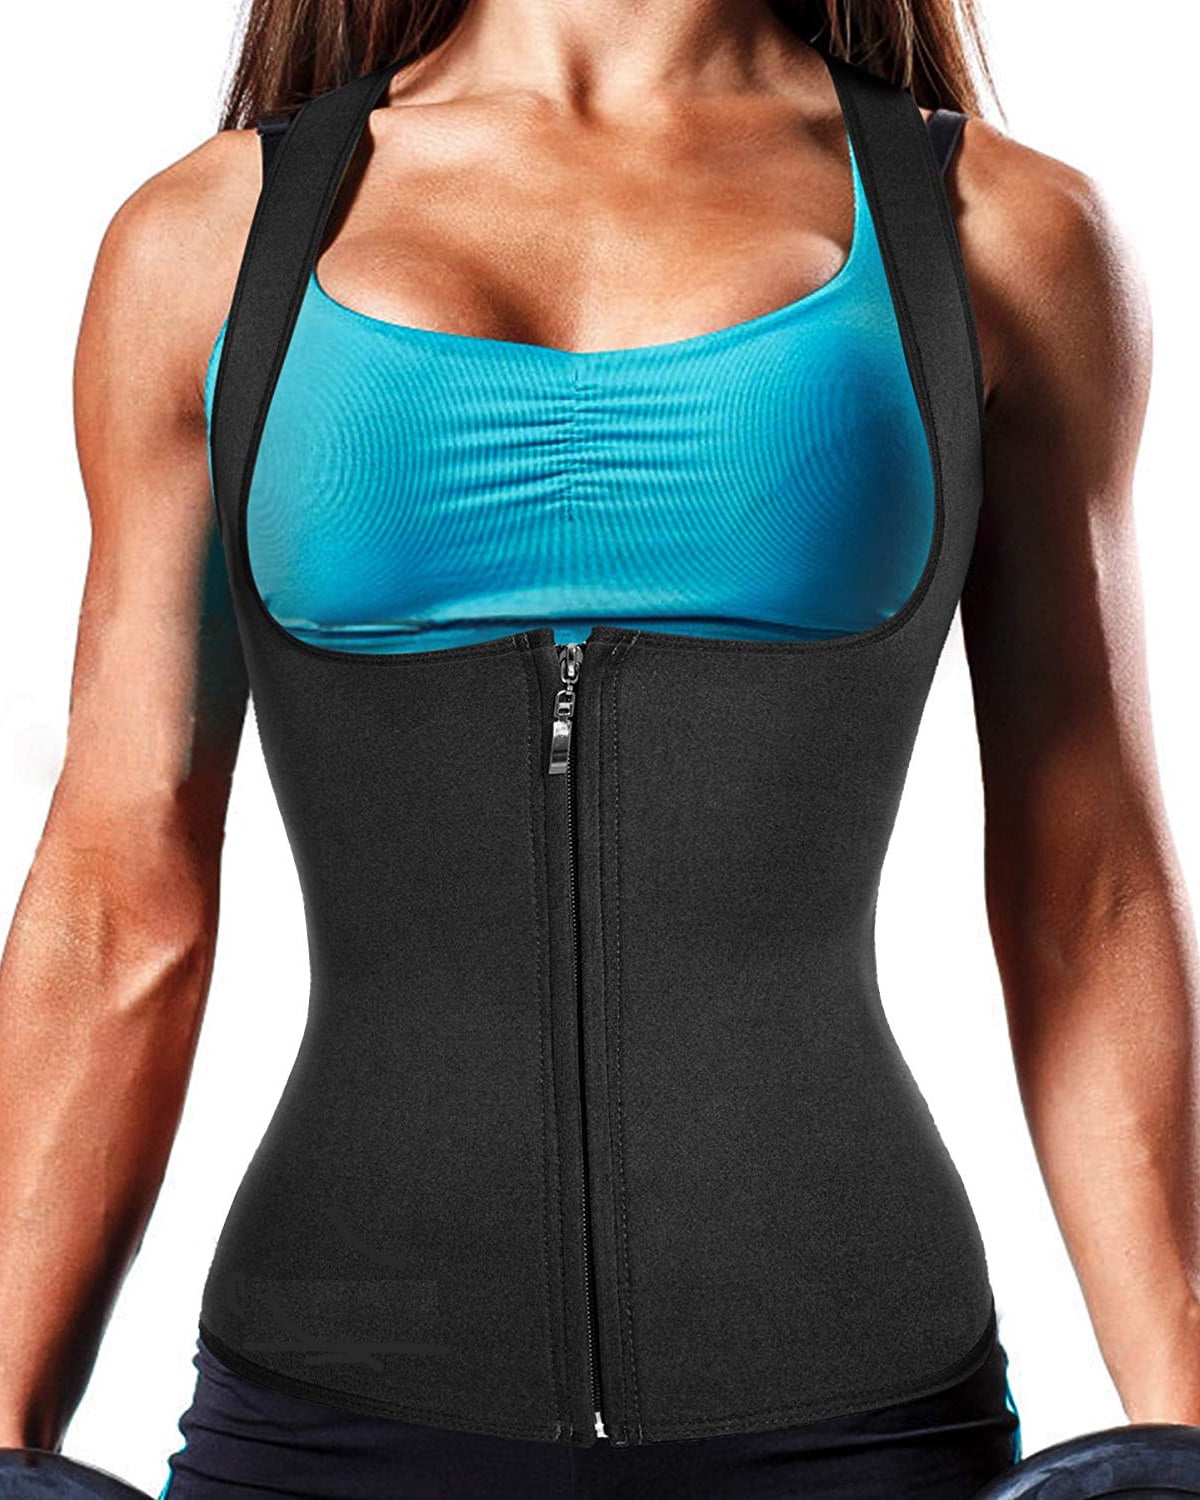 Workout Waist Trainer Sauna Sweat Vest Fitness Body Shaper For Women Weight Loss 